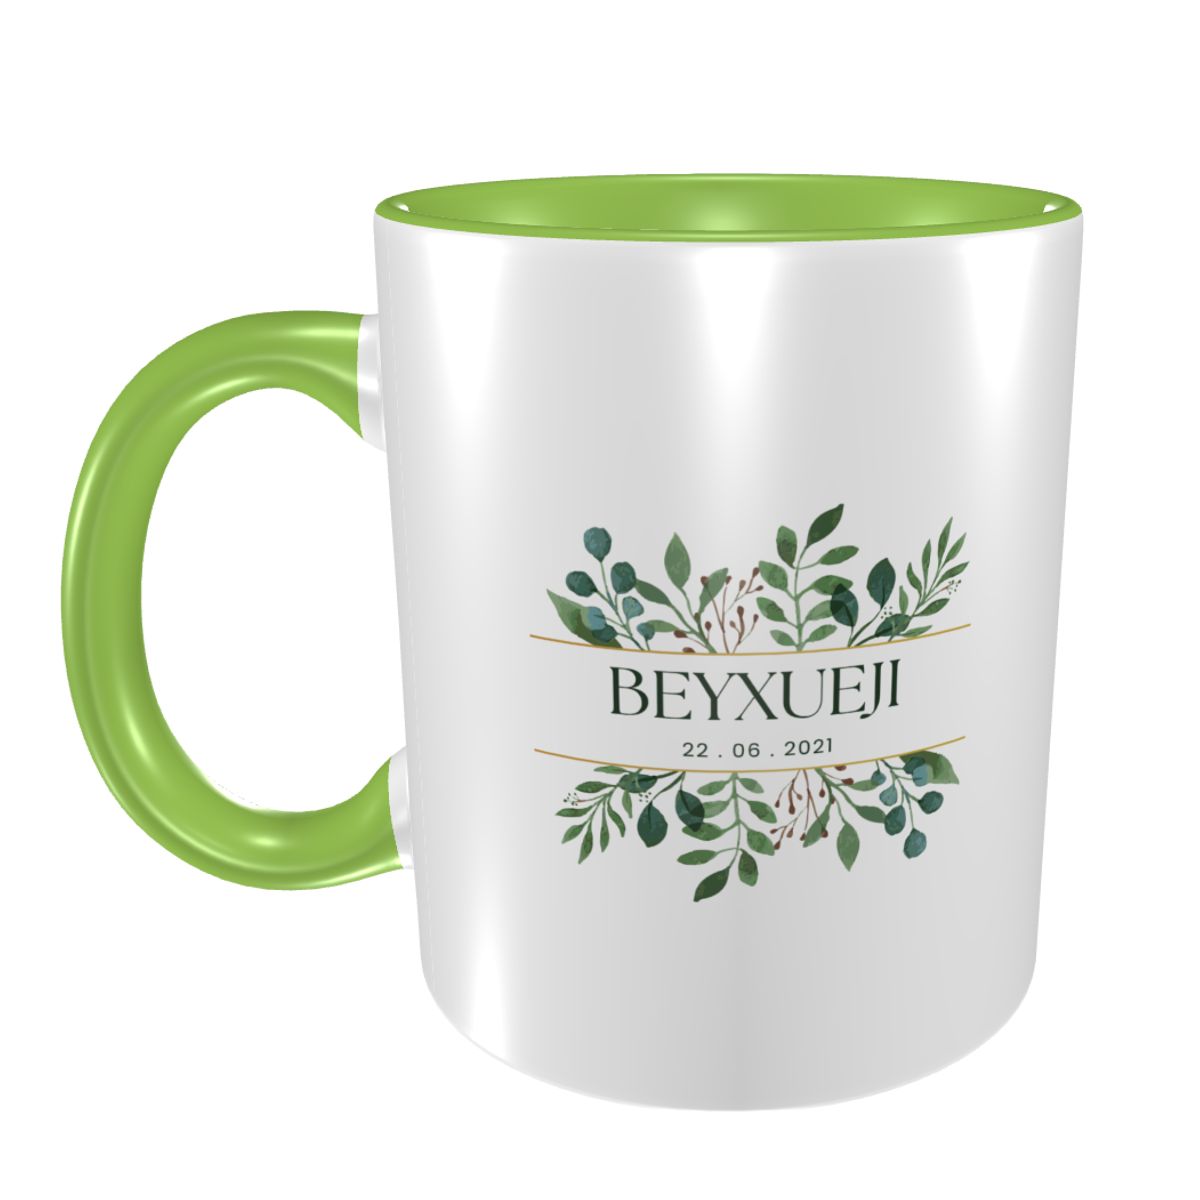 Beyxueji Graphic Printing Mug